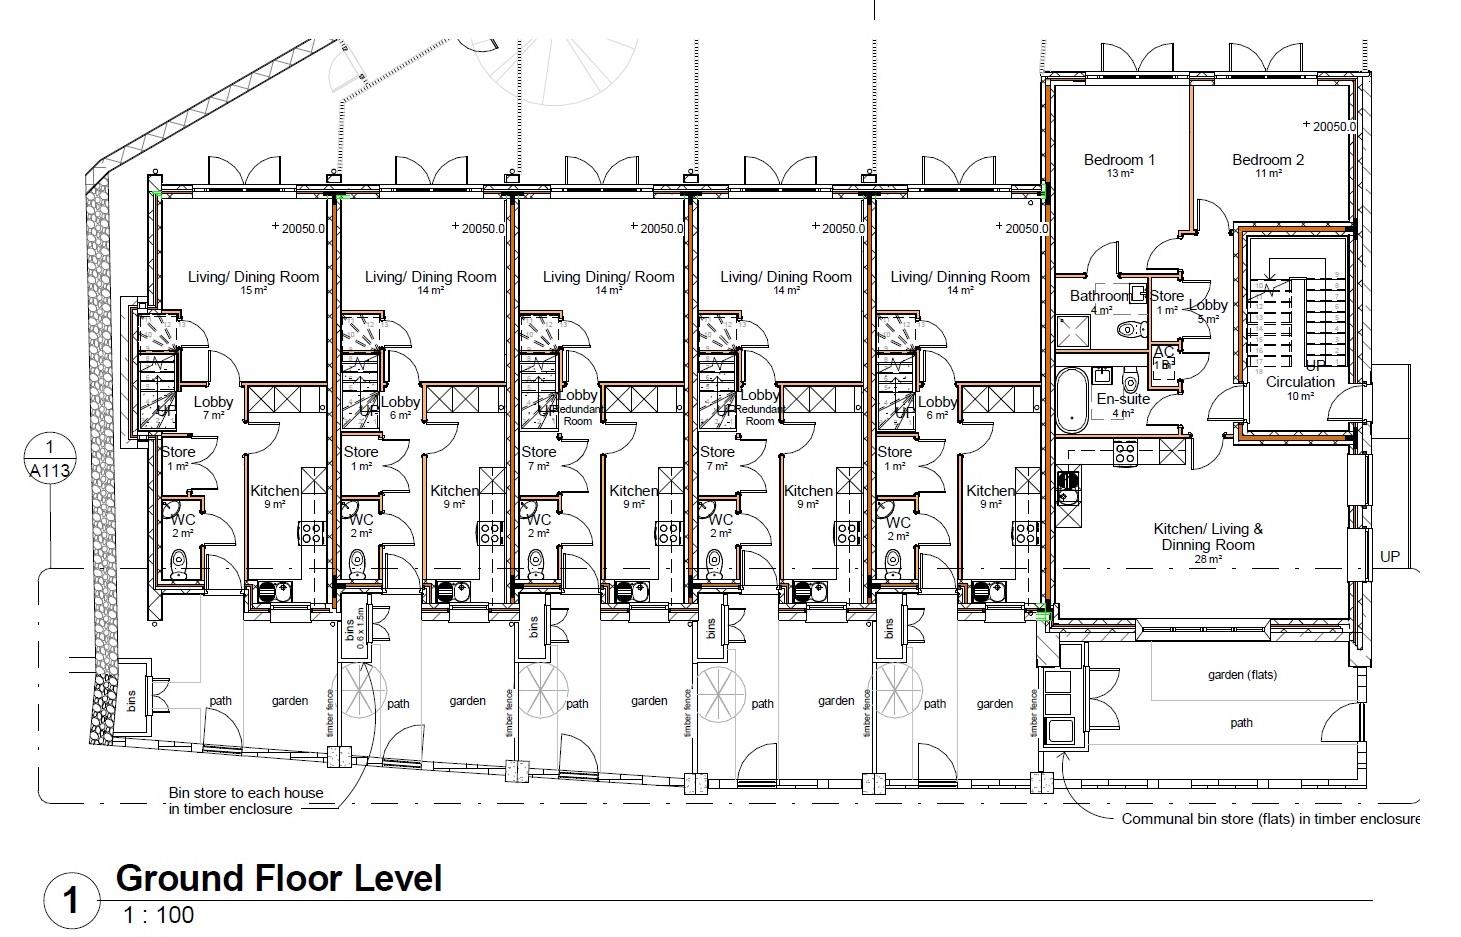 Floorplans For Development Site @ 12 Station Road, Shirehampton